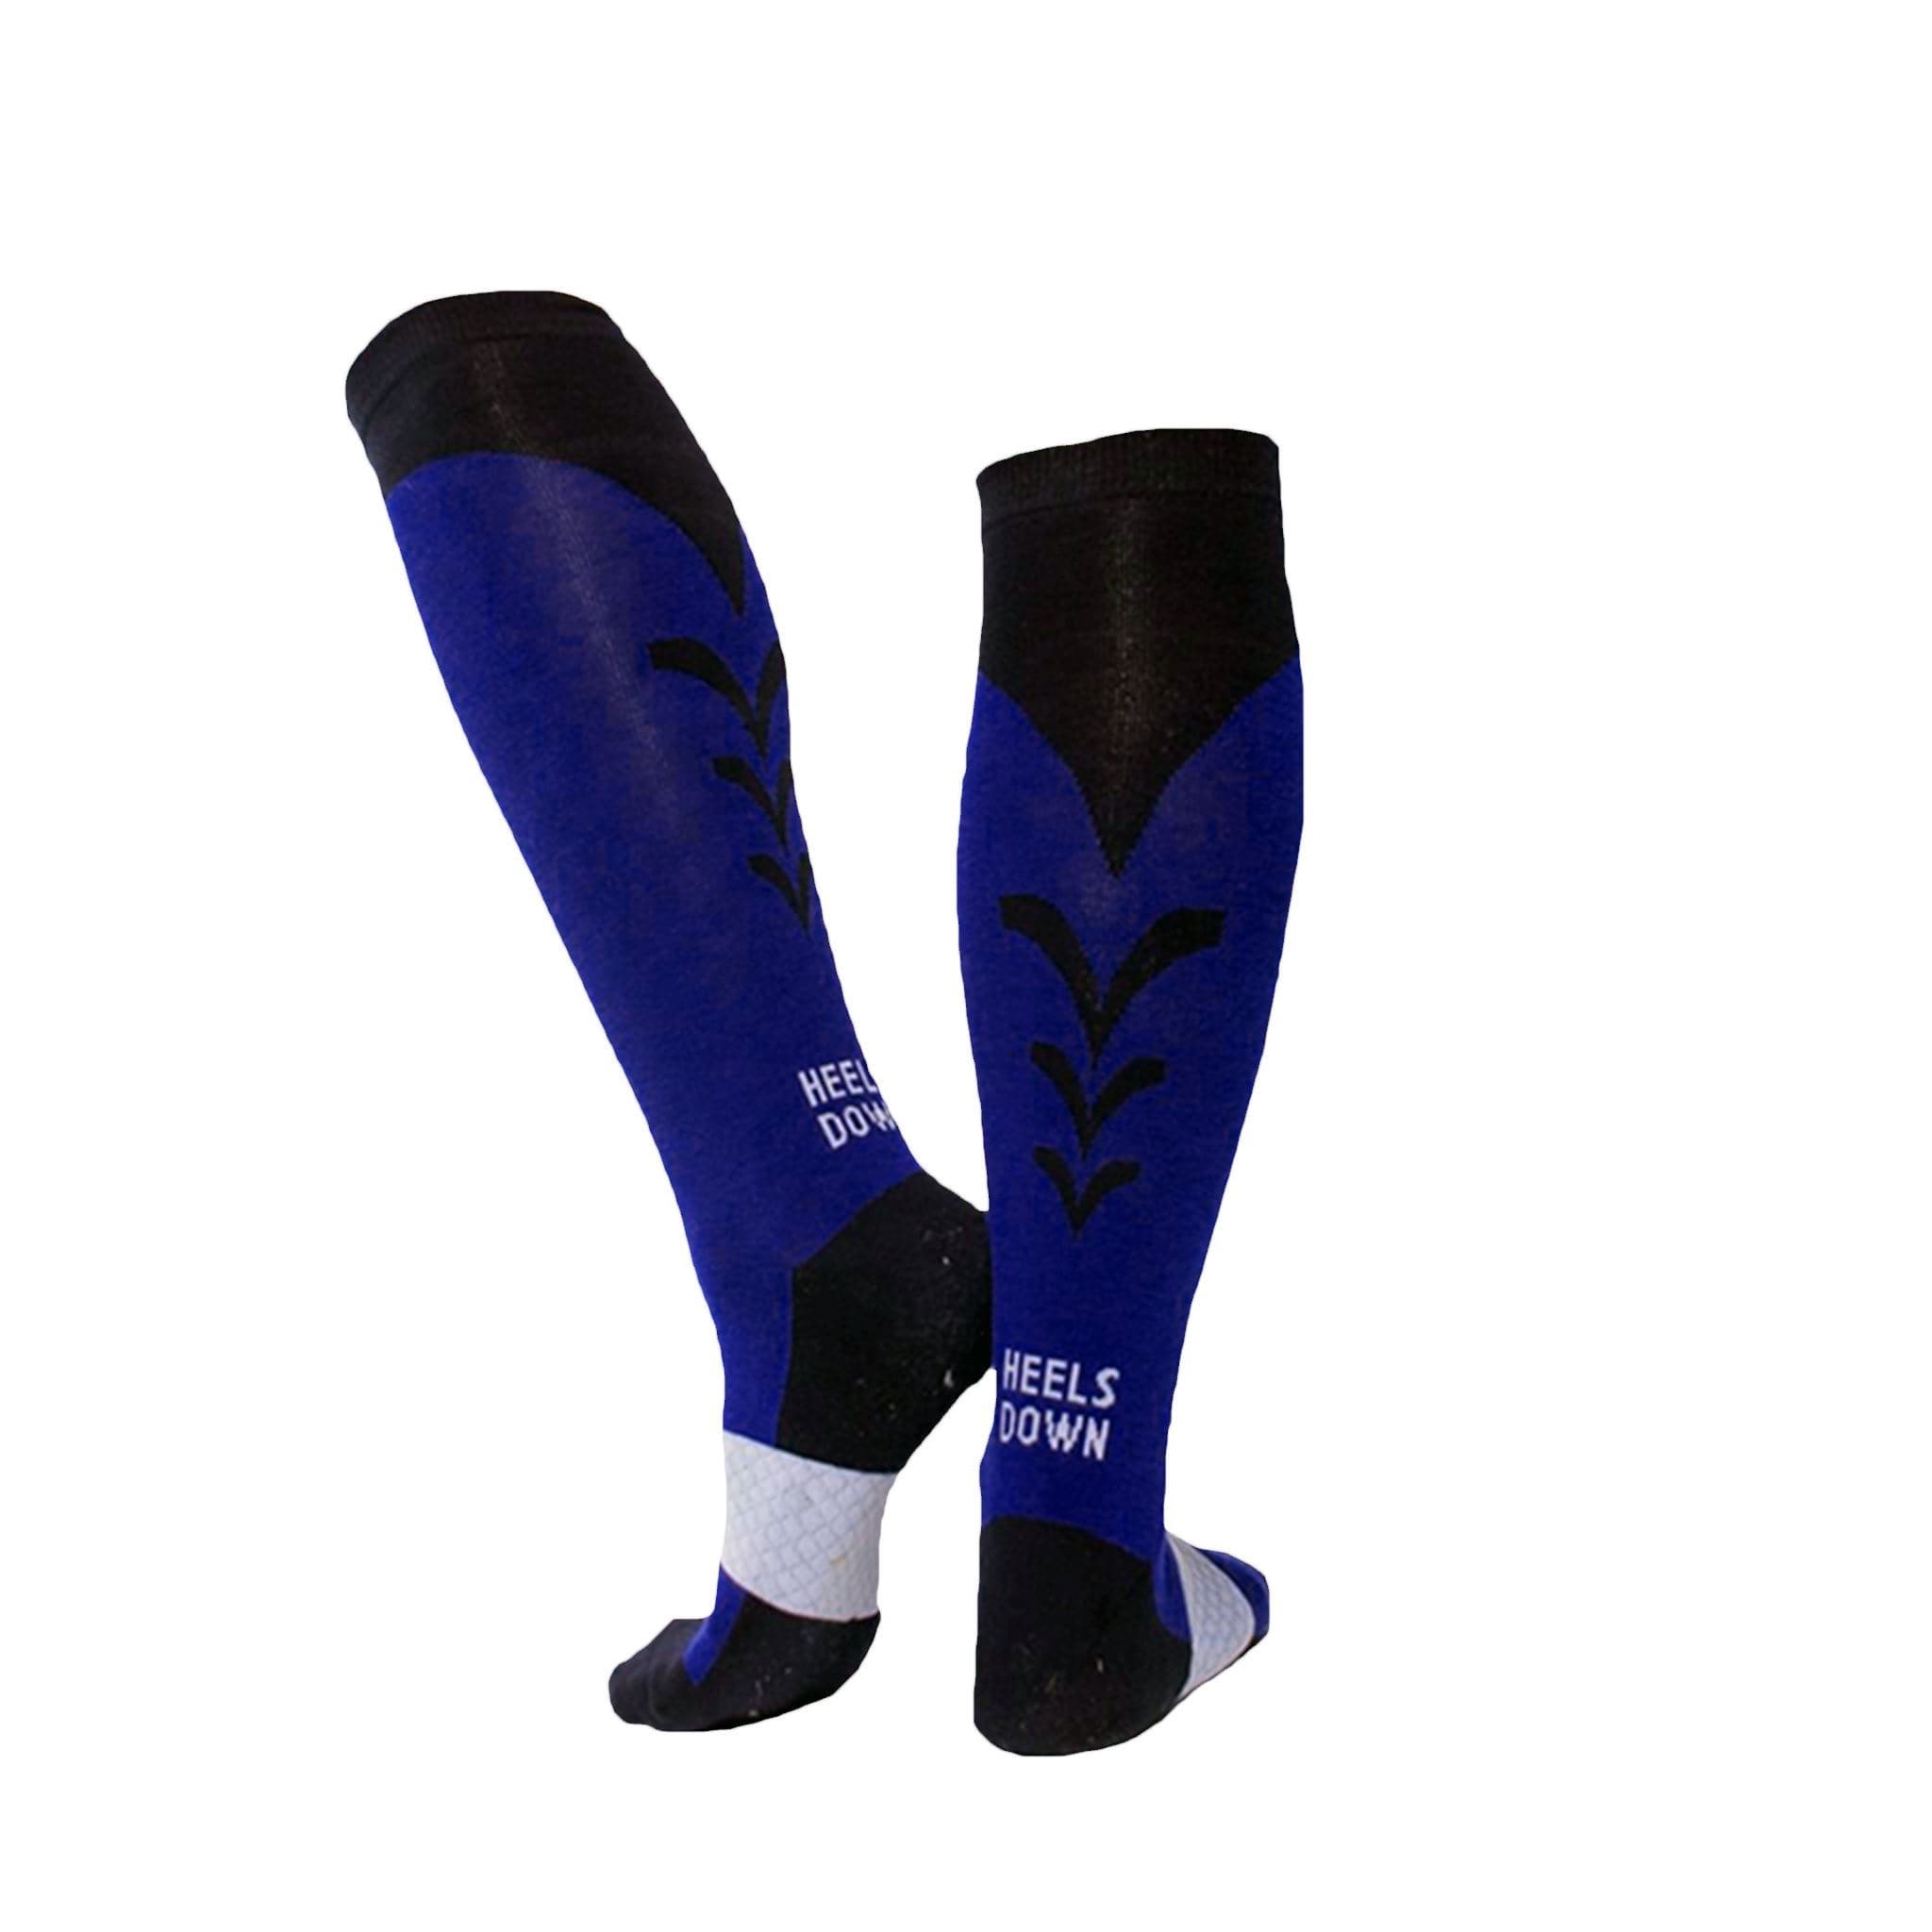 High Performance Riding Socks - Navy socks mistylaurel BELTS